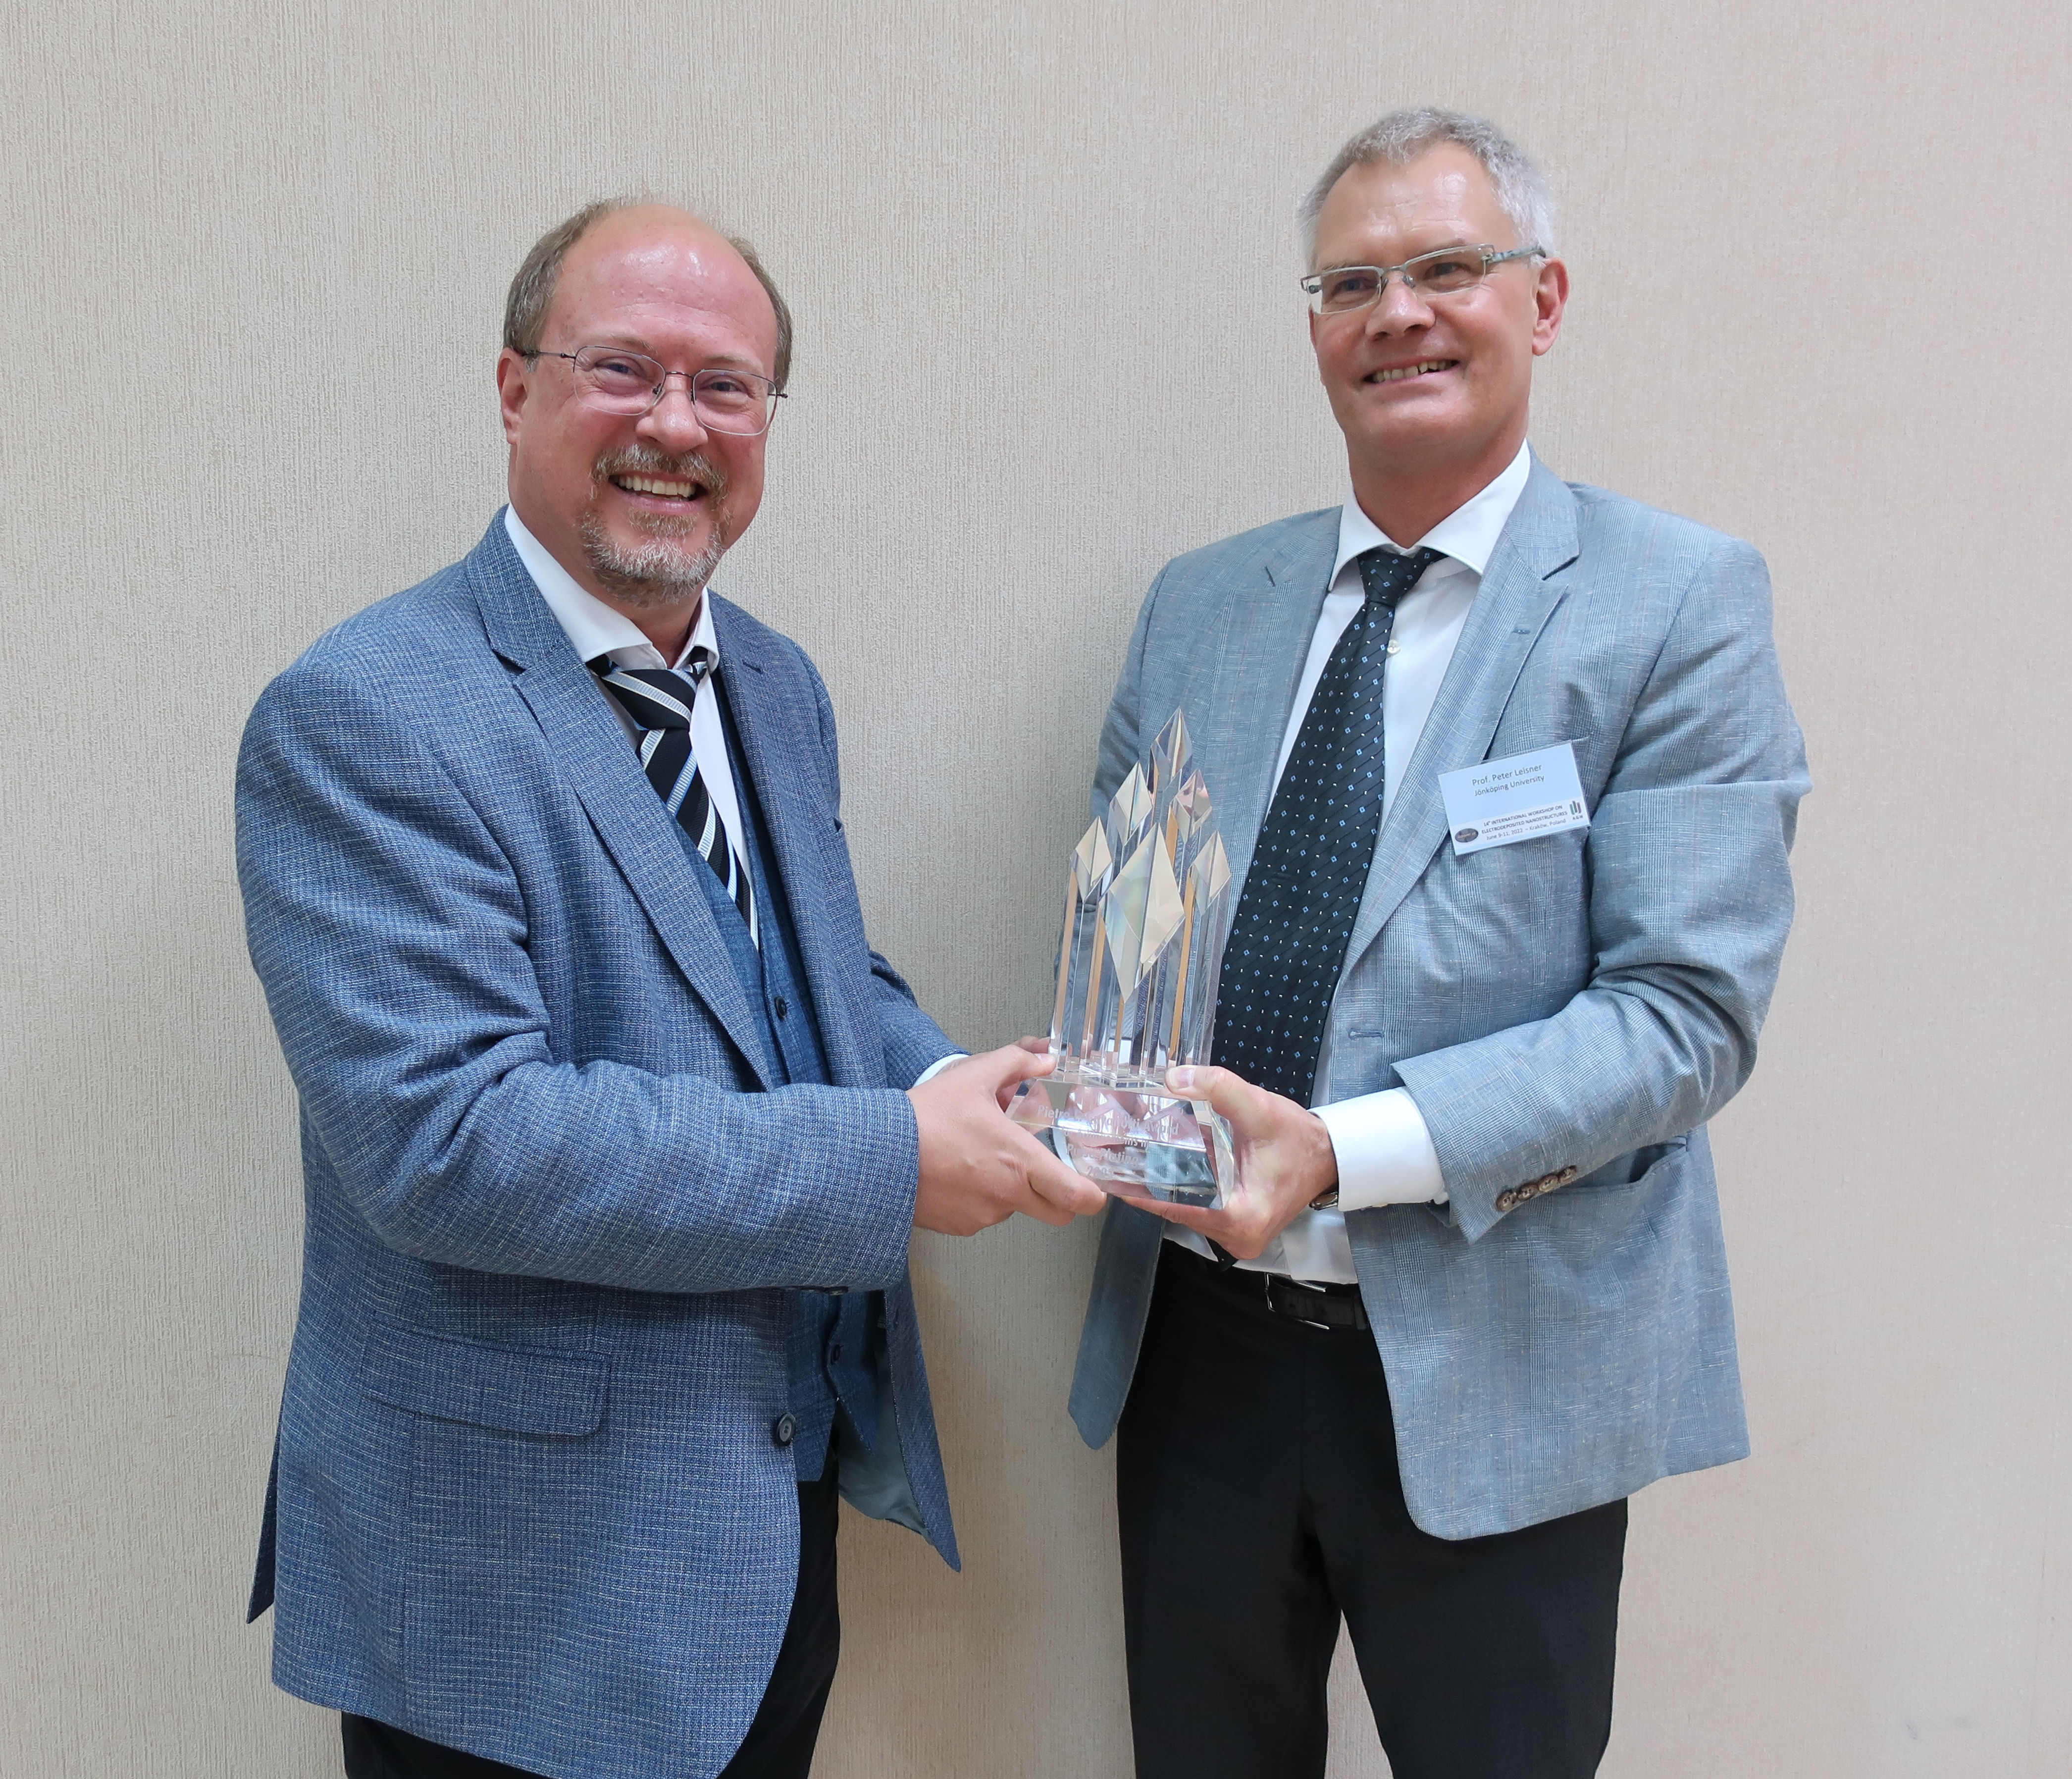 Prof. Dr. Peter Leisner received the Pulse Plating Award 2022